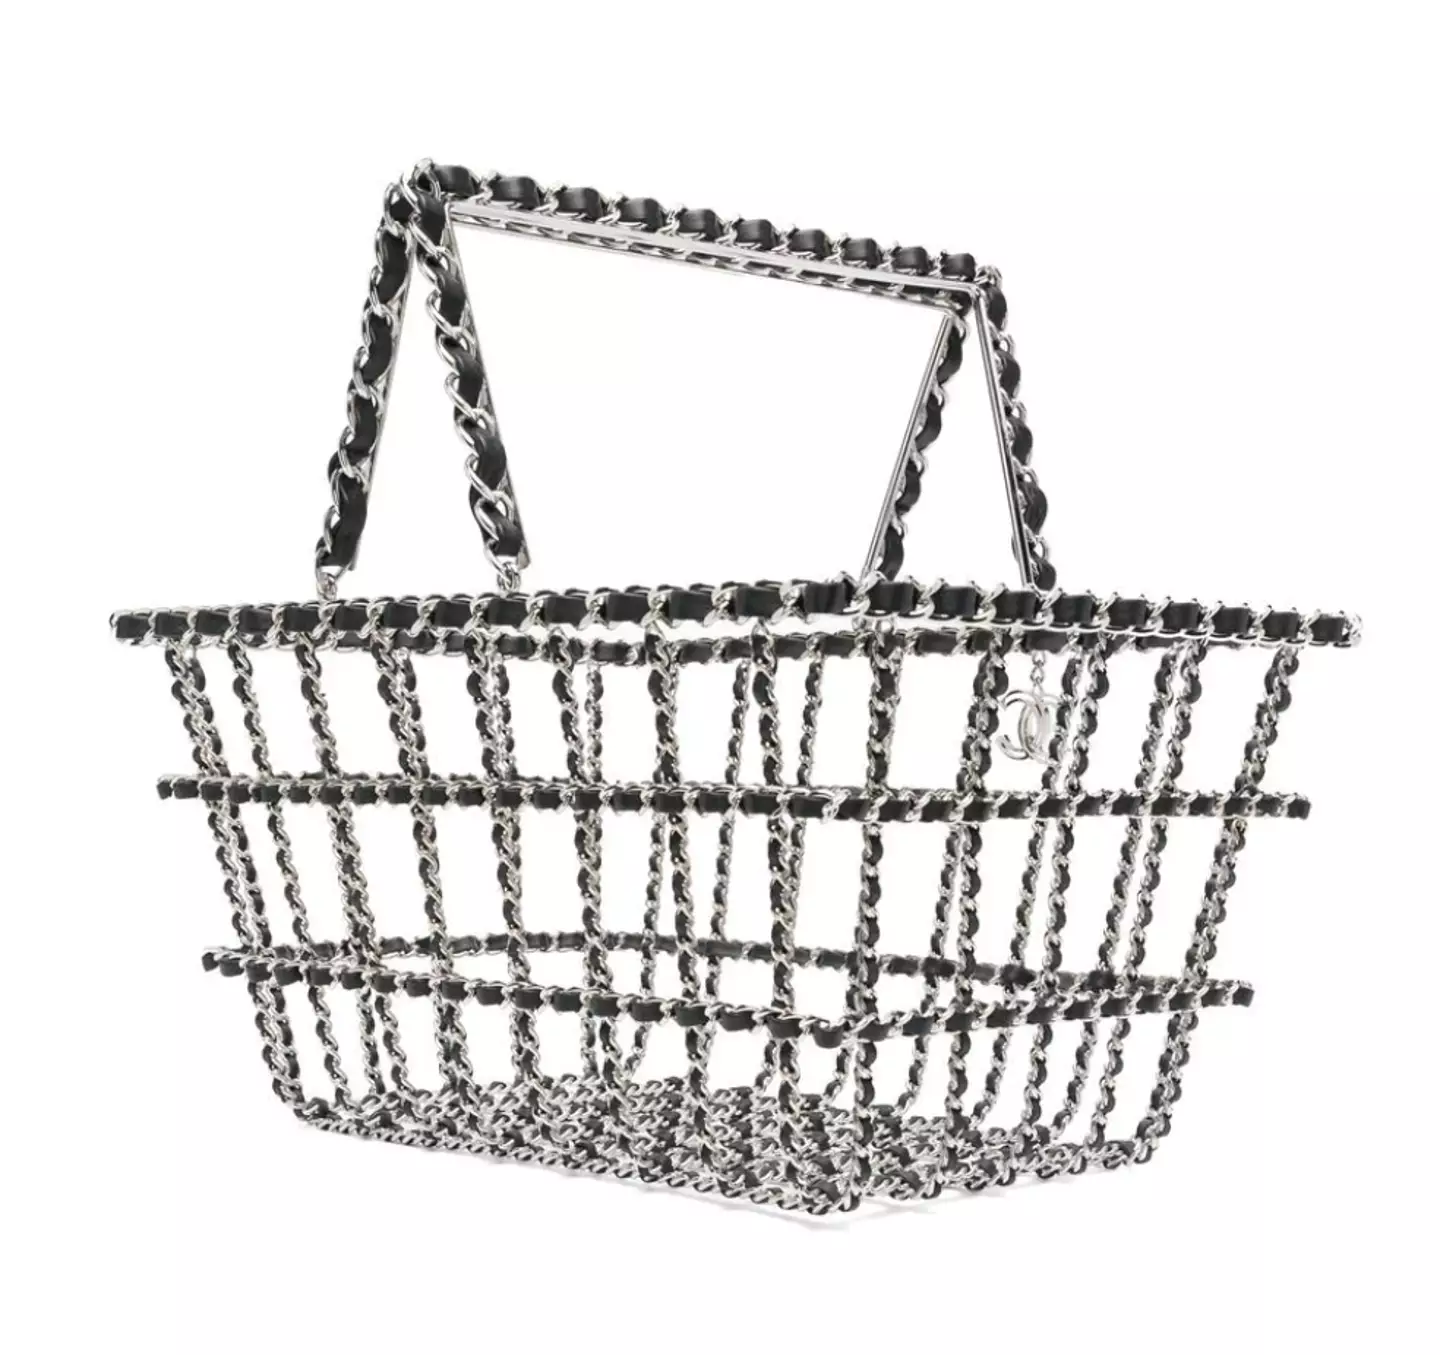 The basket is a little bit fancier than your average supermarket one.